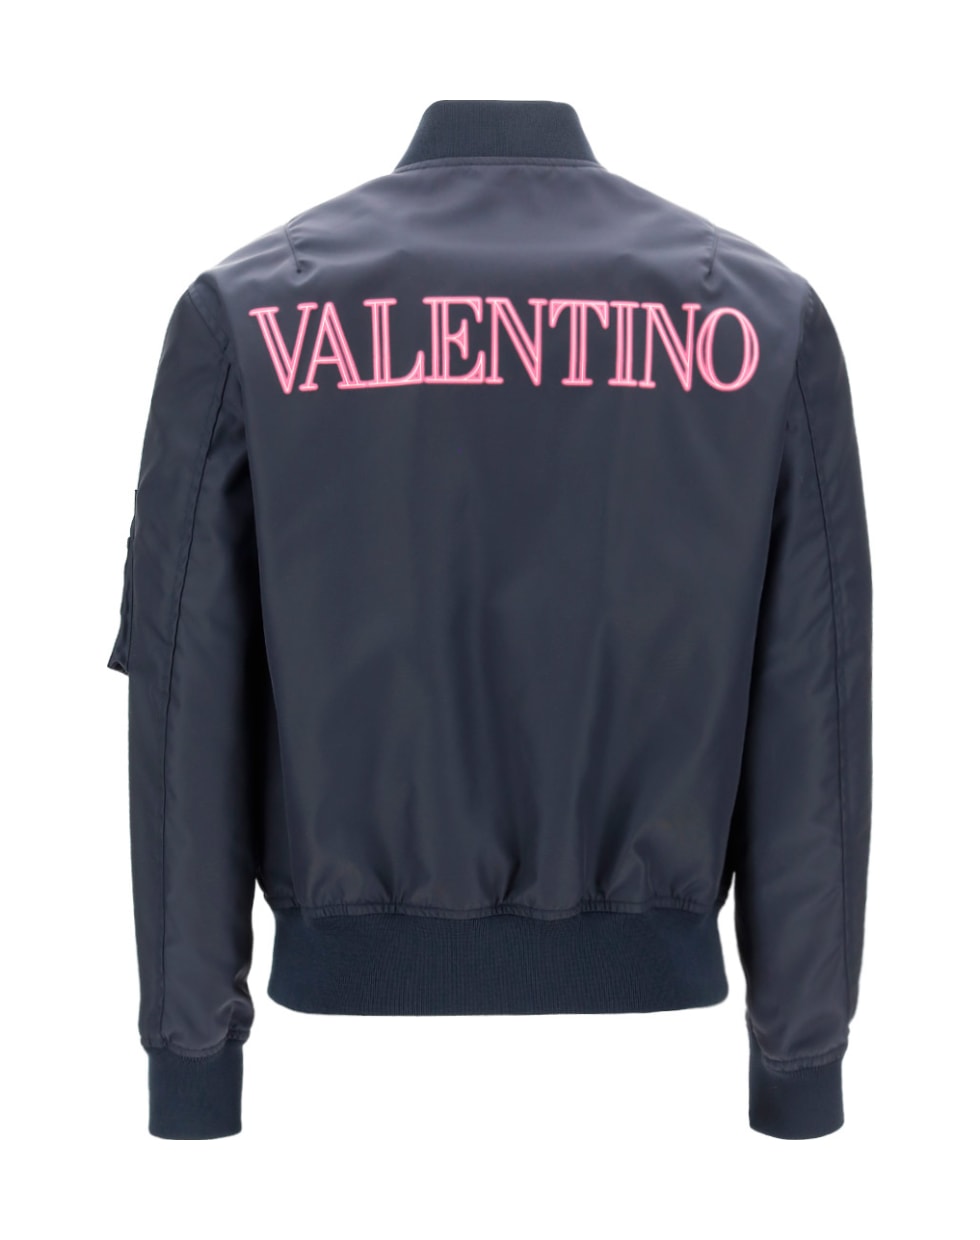 Valentino Jacket - Navy